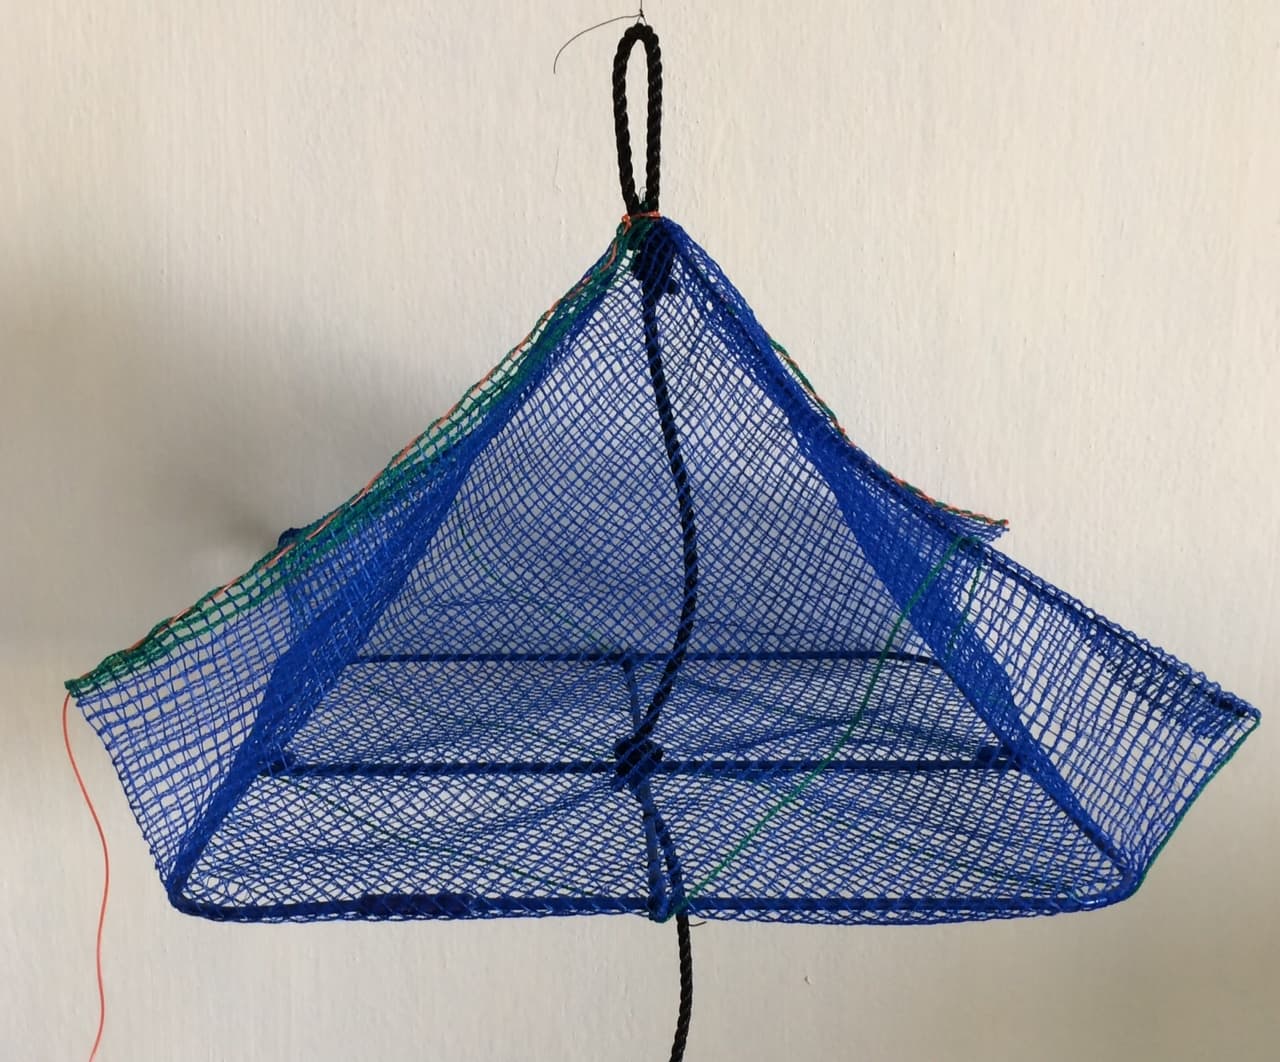 Lantern net for scallop, oyster farming